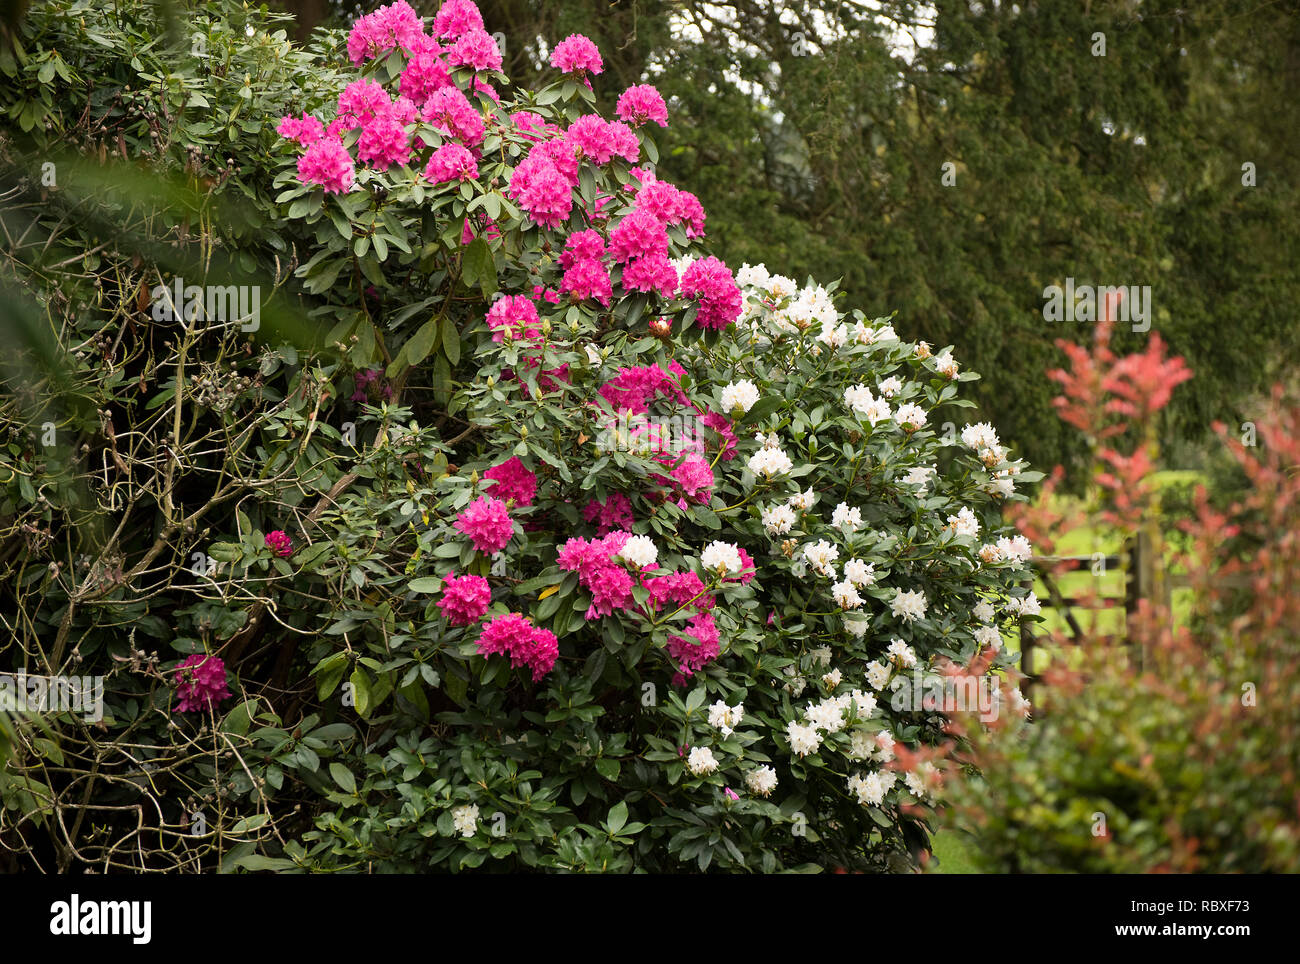 Rhododendron bush flowering Stock Photo